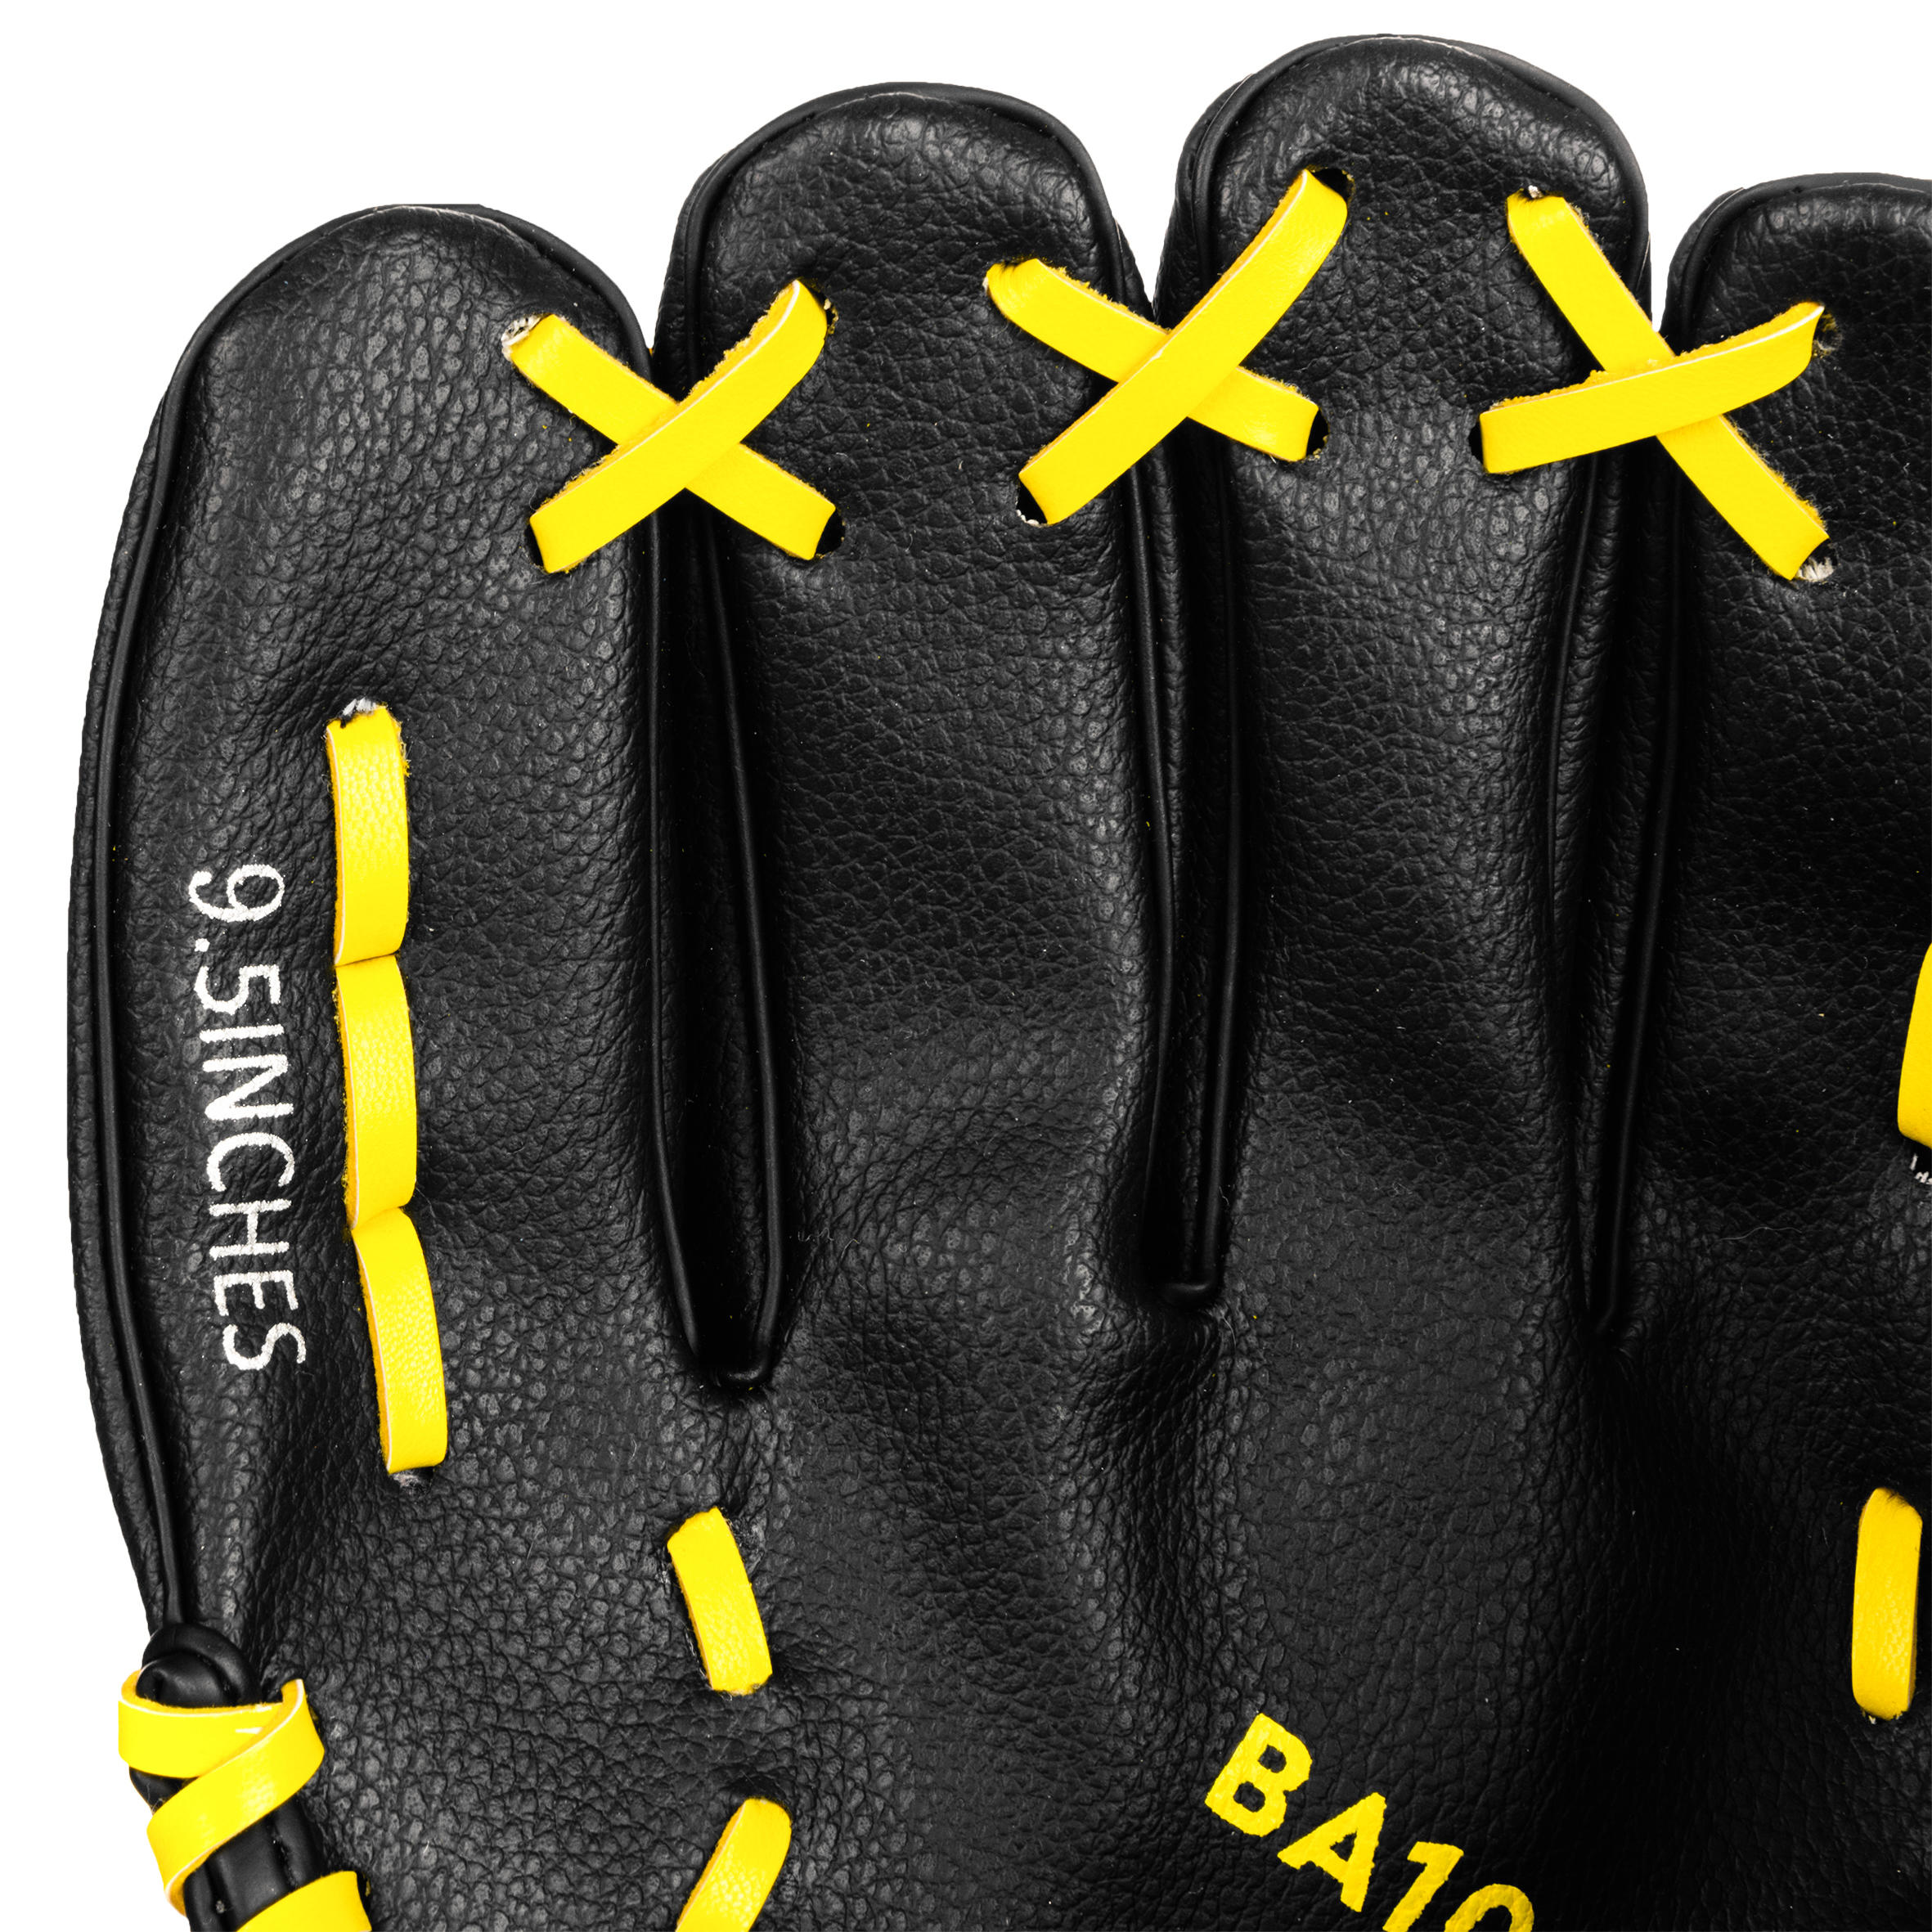 Baseball glove left-hand throw Kid - BA100 Yellow Black 6/7